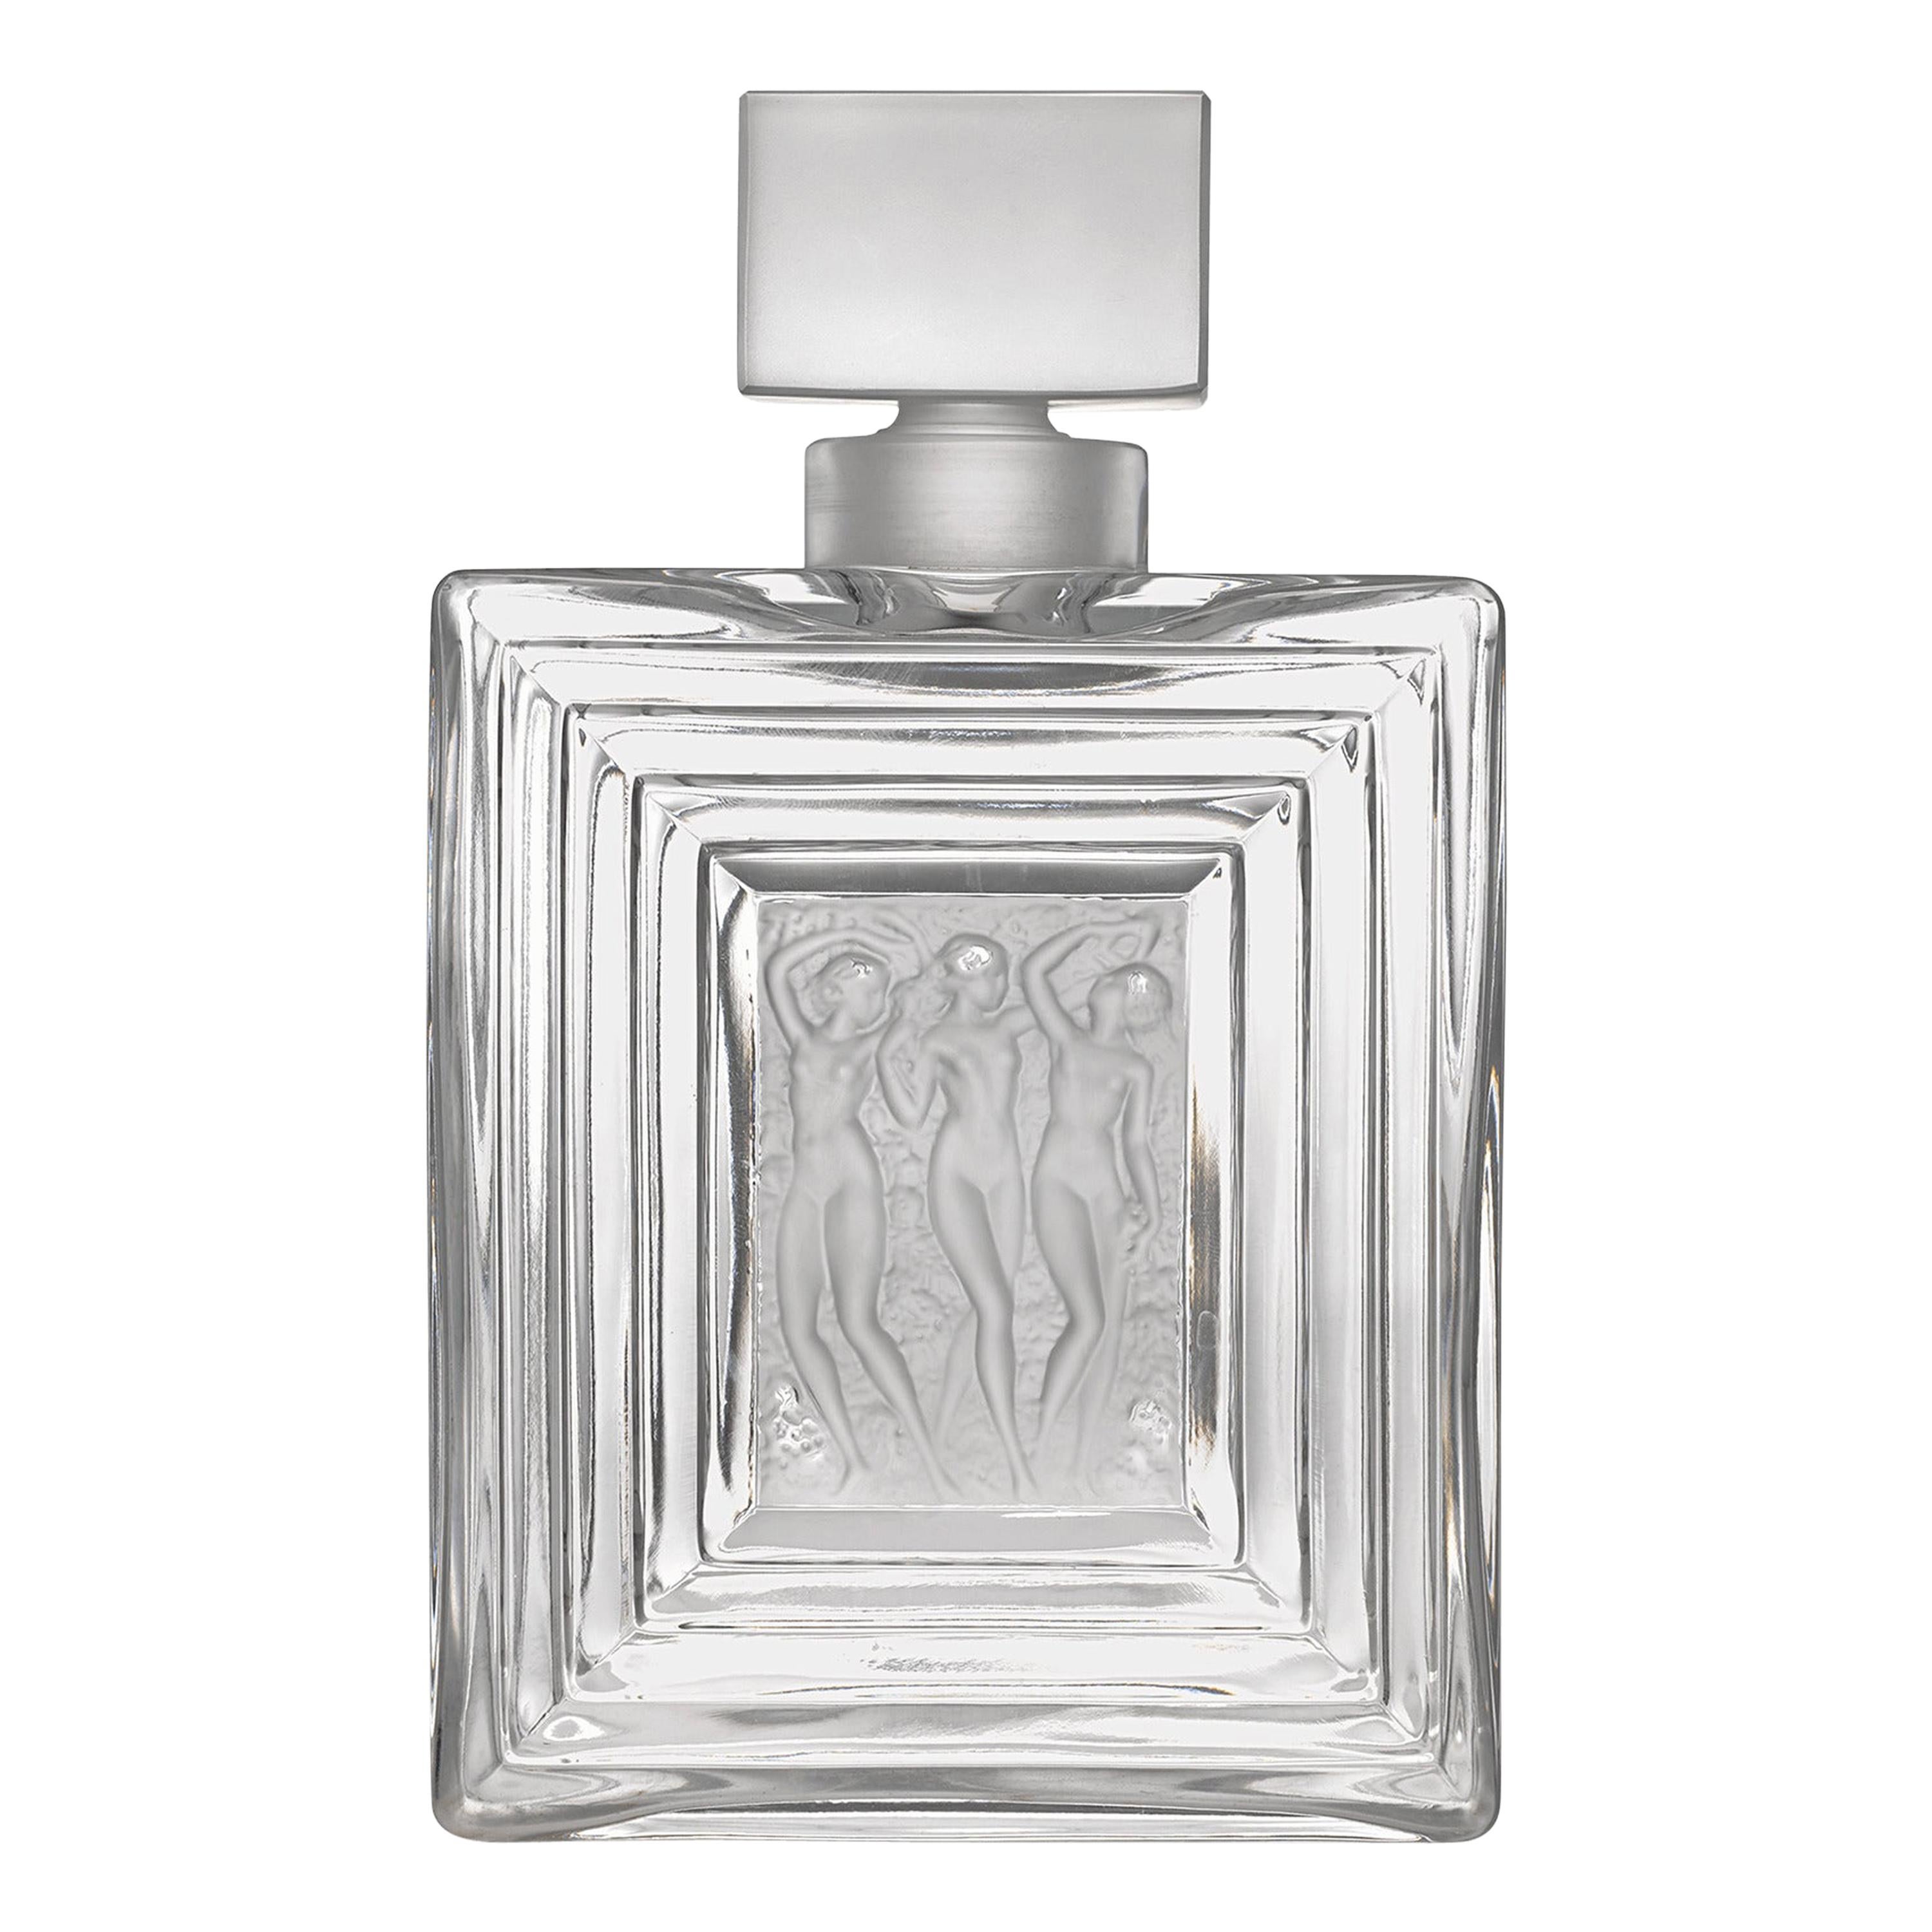  Art Deco “Three Nudes” Decanter by Lalique